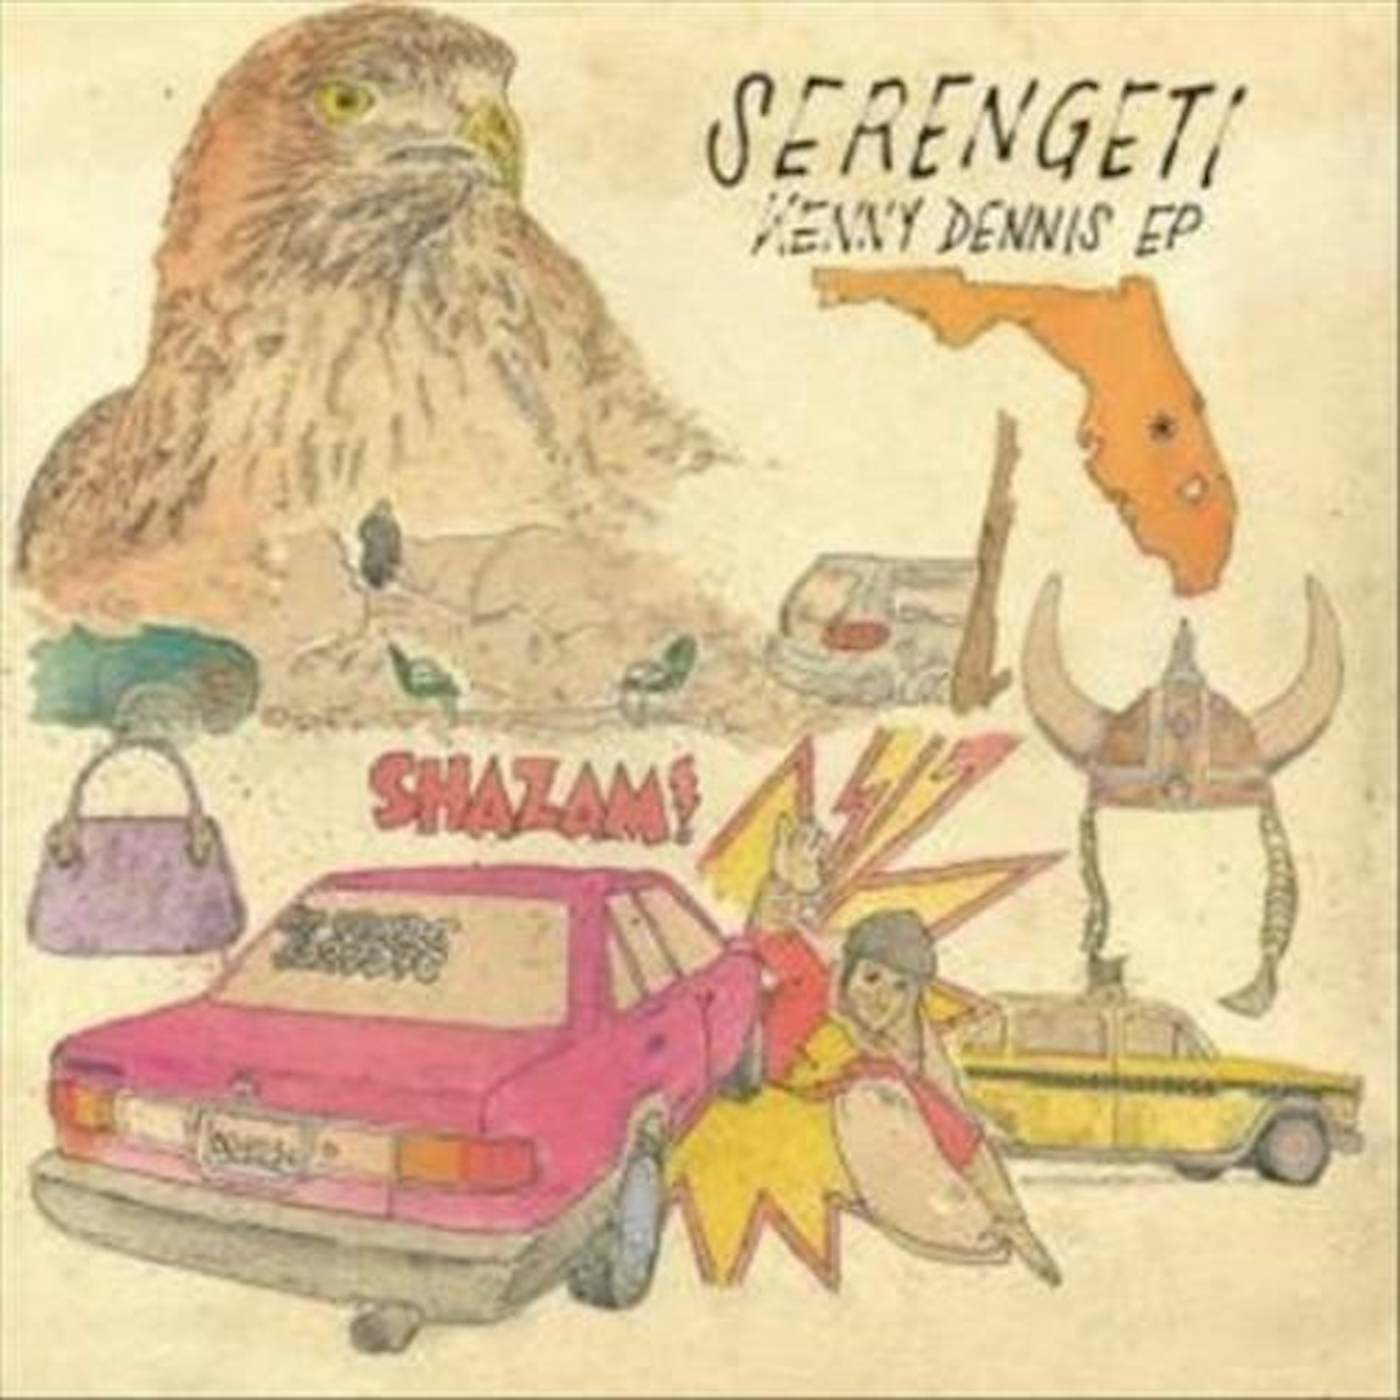 Serengeti Kenny Dennis Ep Vinyl Record